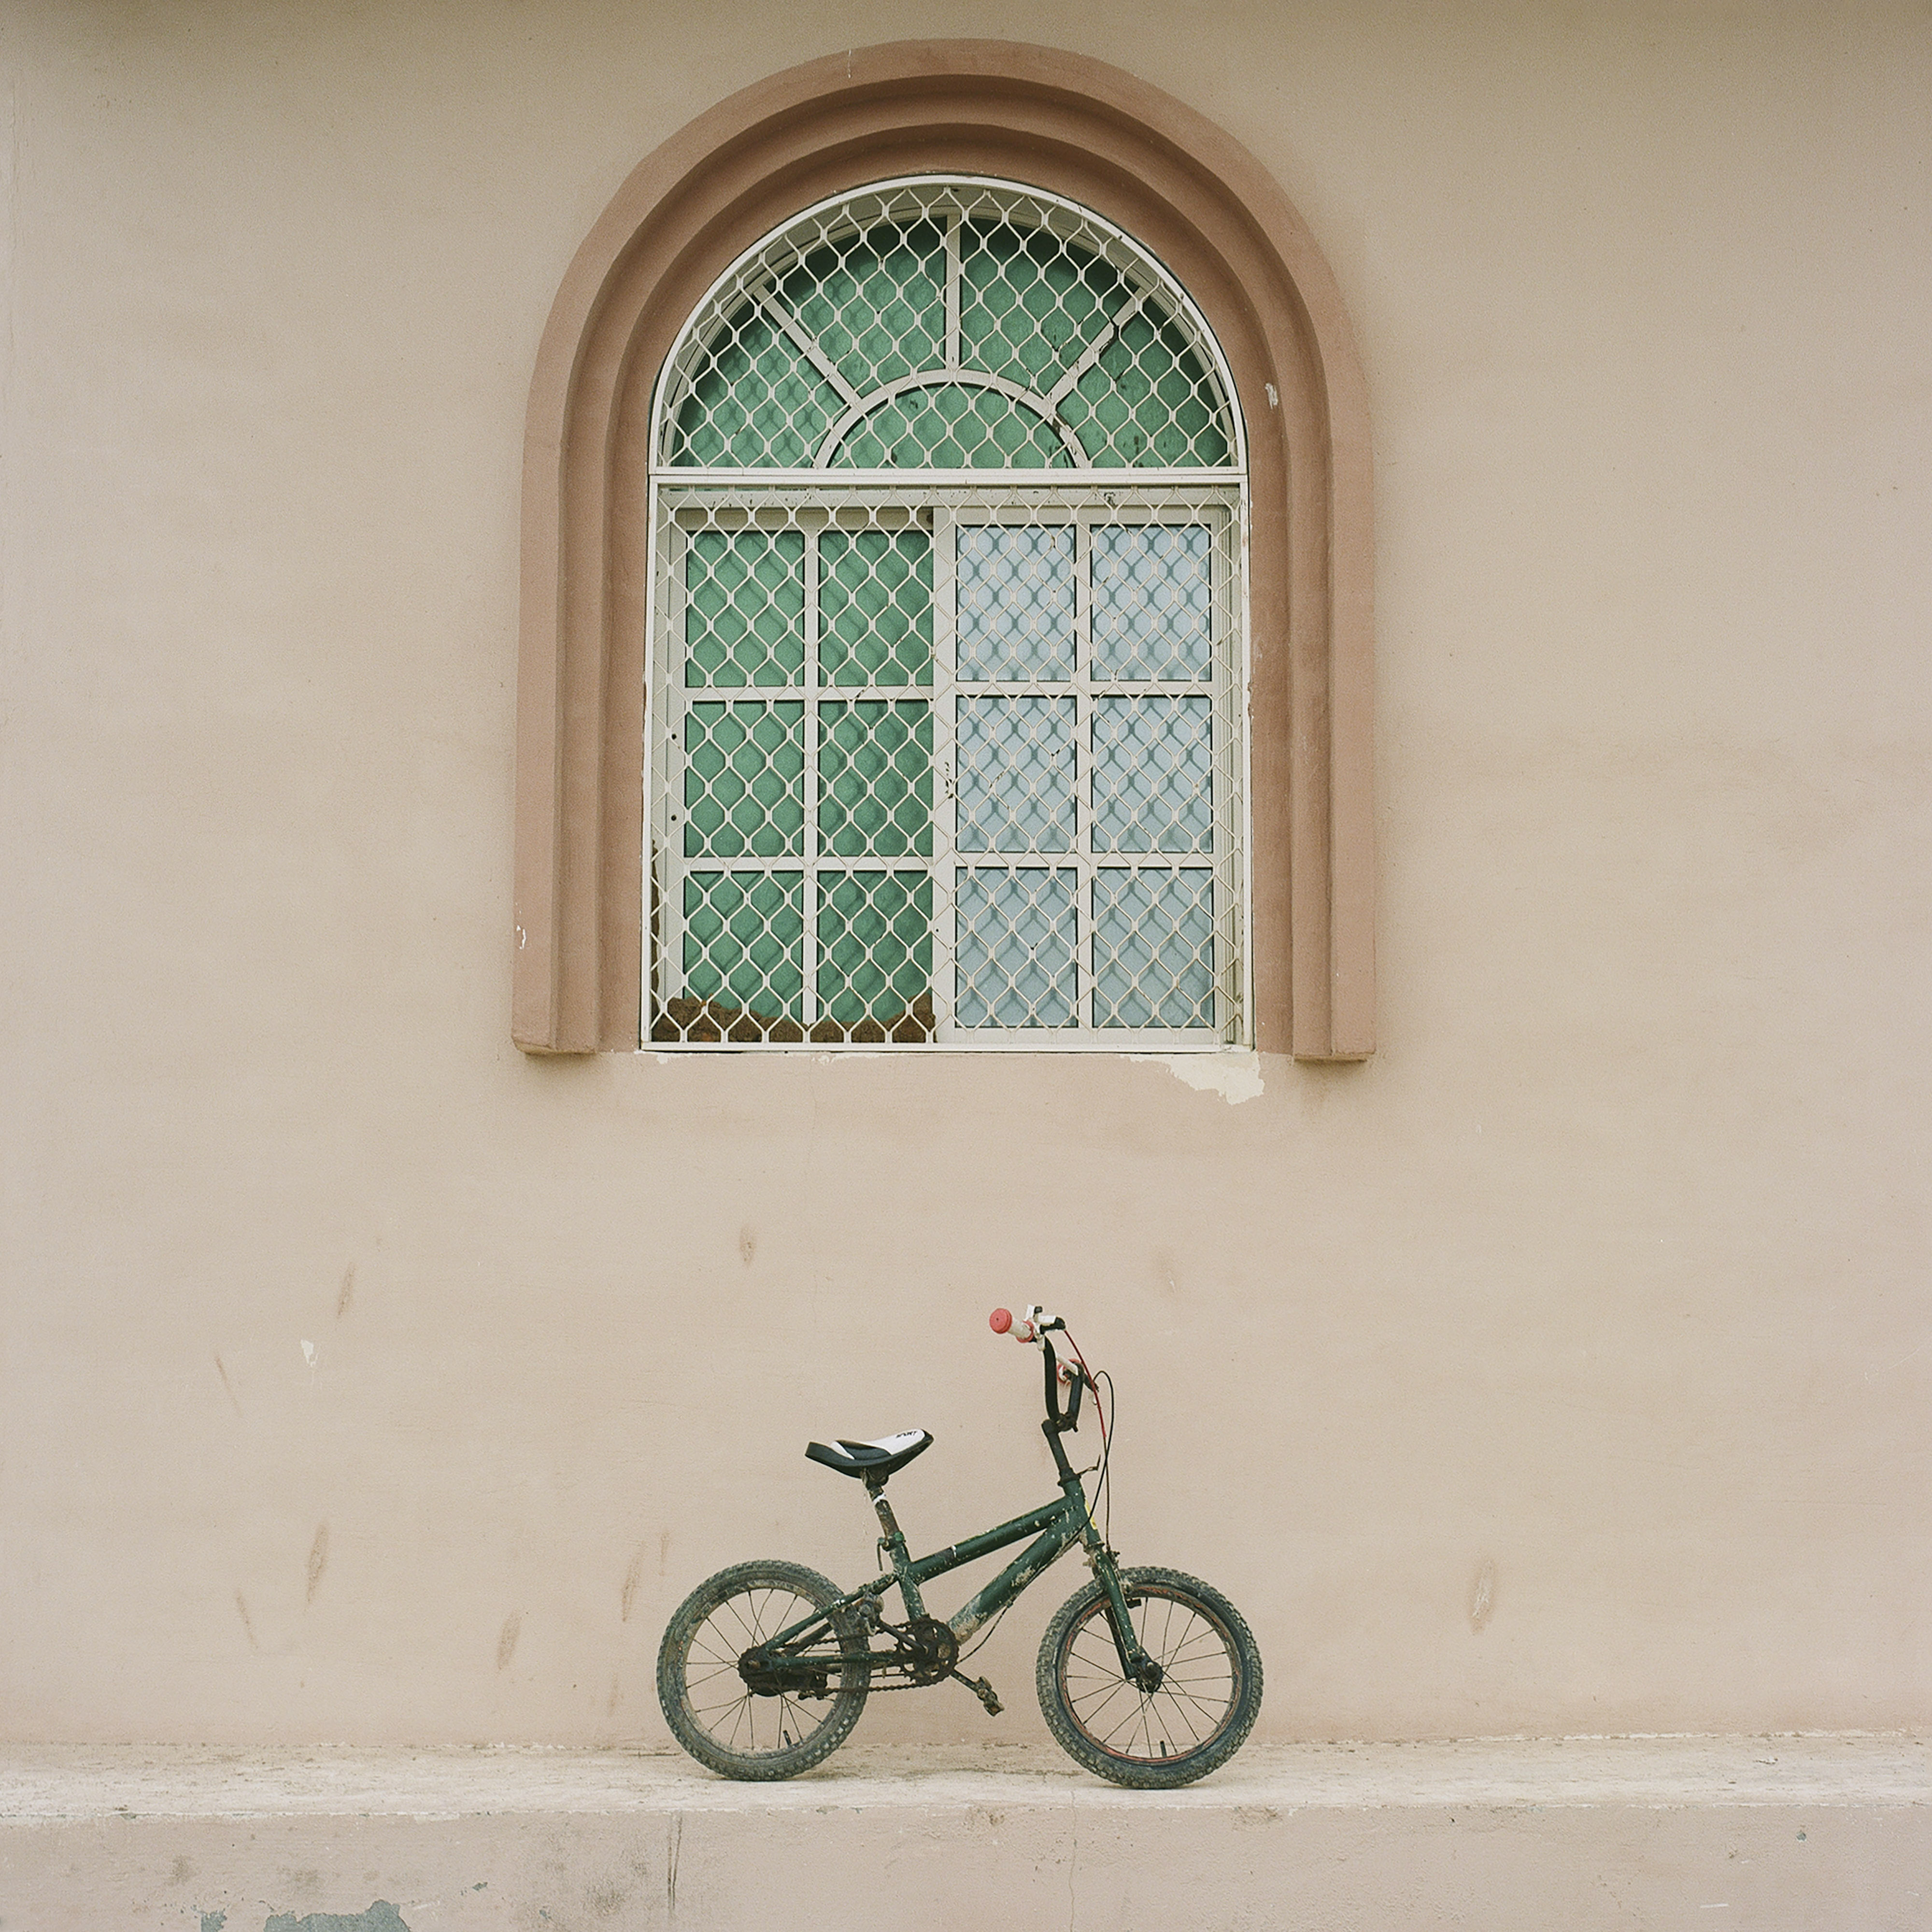 Bicycle Underneath Window.